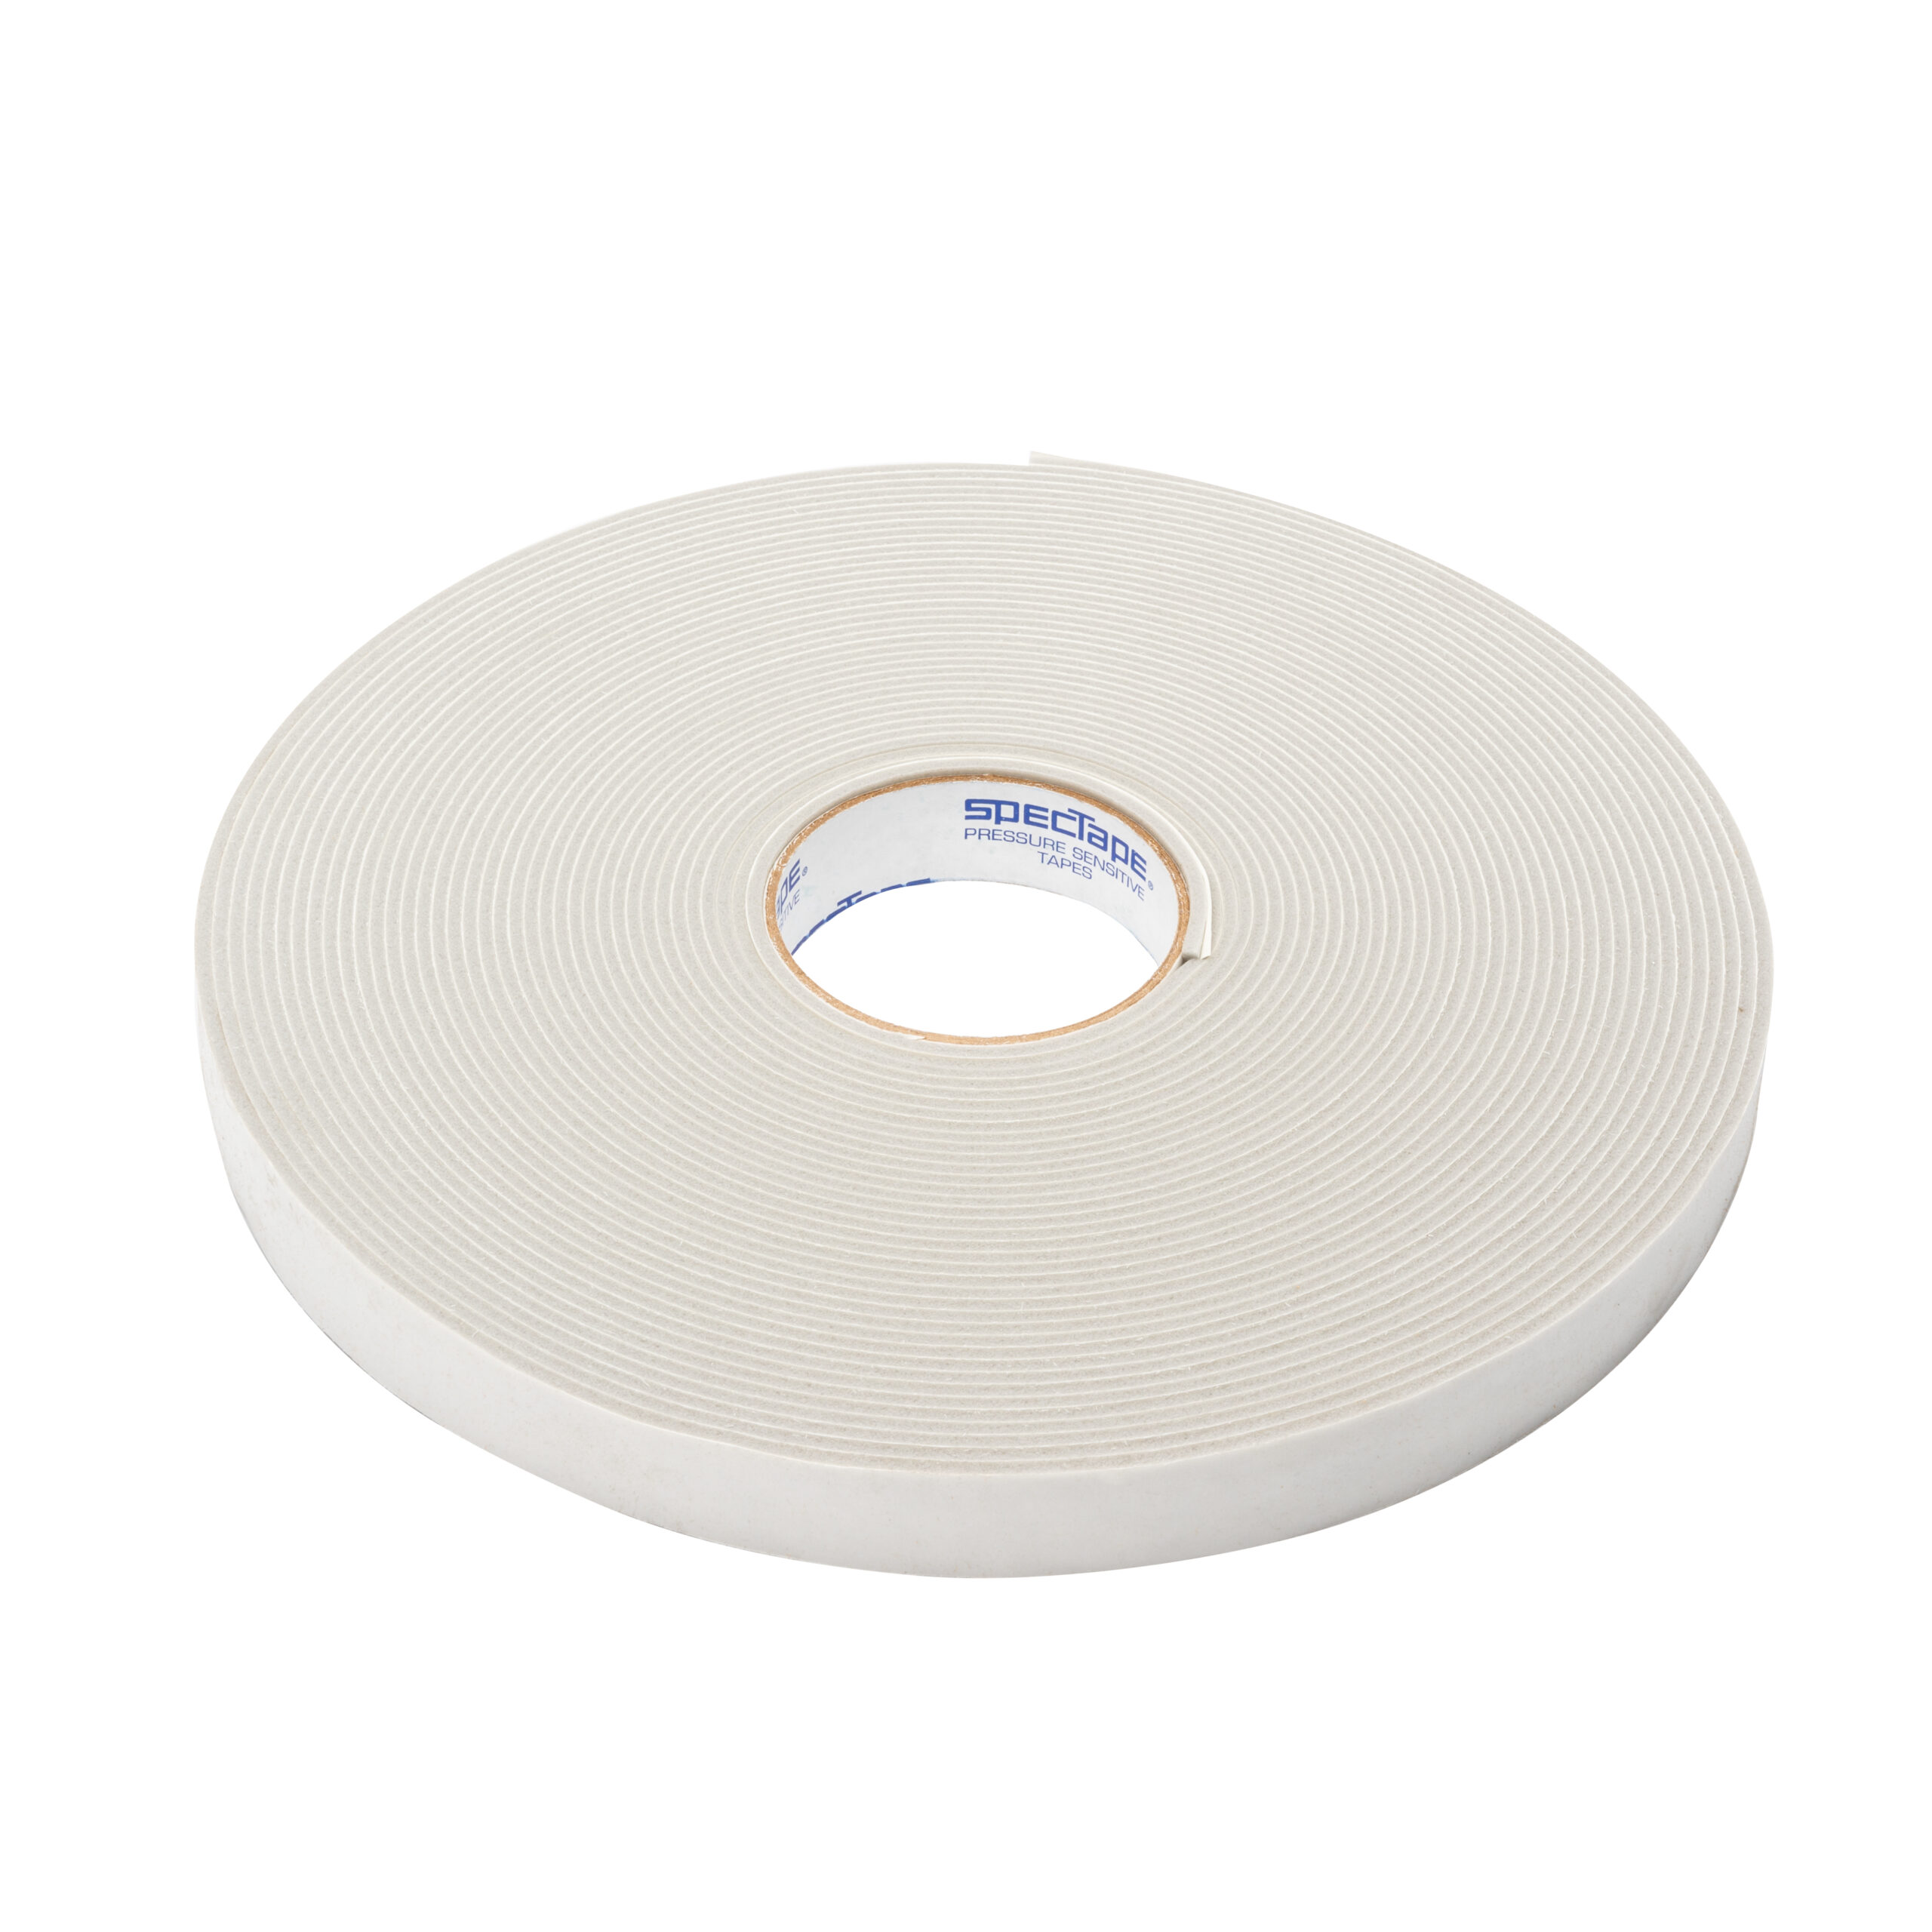 Masking tape spectape pressure sensitive 1/2 inch wide , 3 inch core ( 4  Rolls )